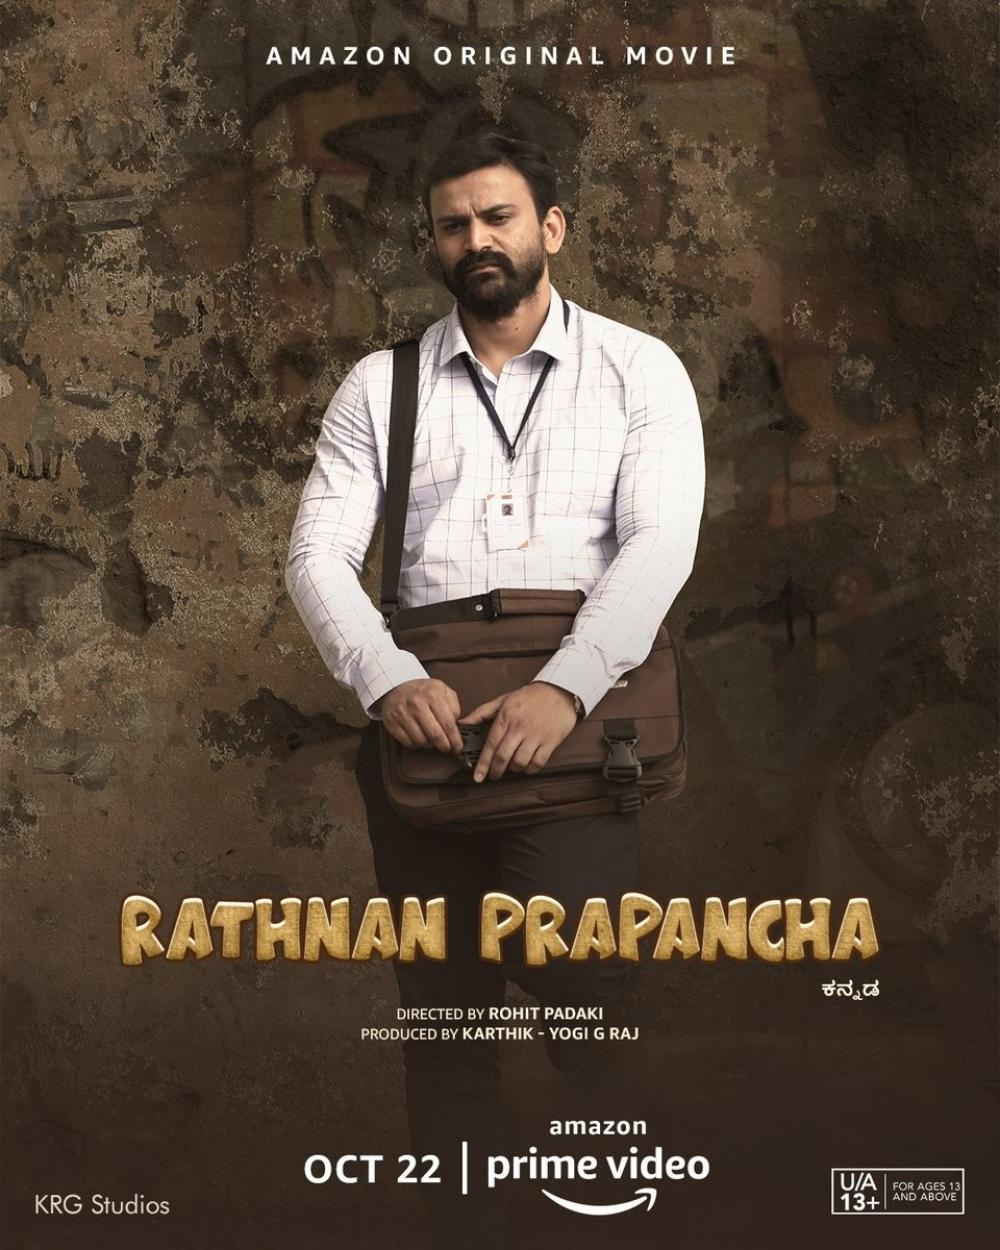 The Weekend Leader - Kannada comedy drama 'Rathnan Prapancha' to release digitally